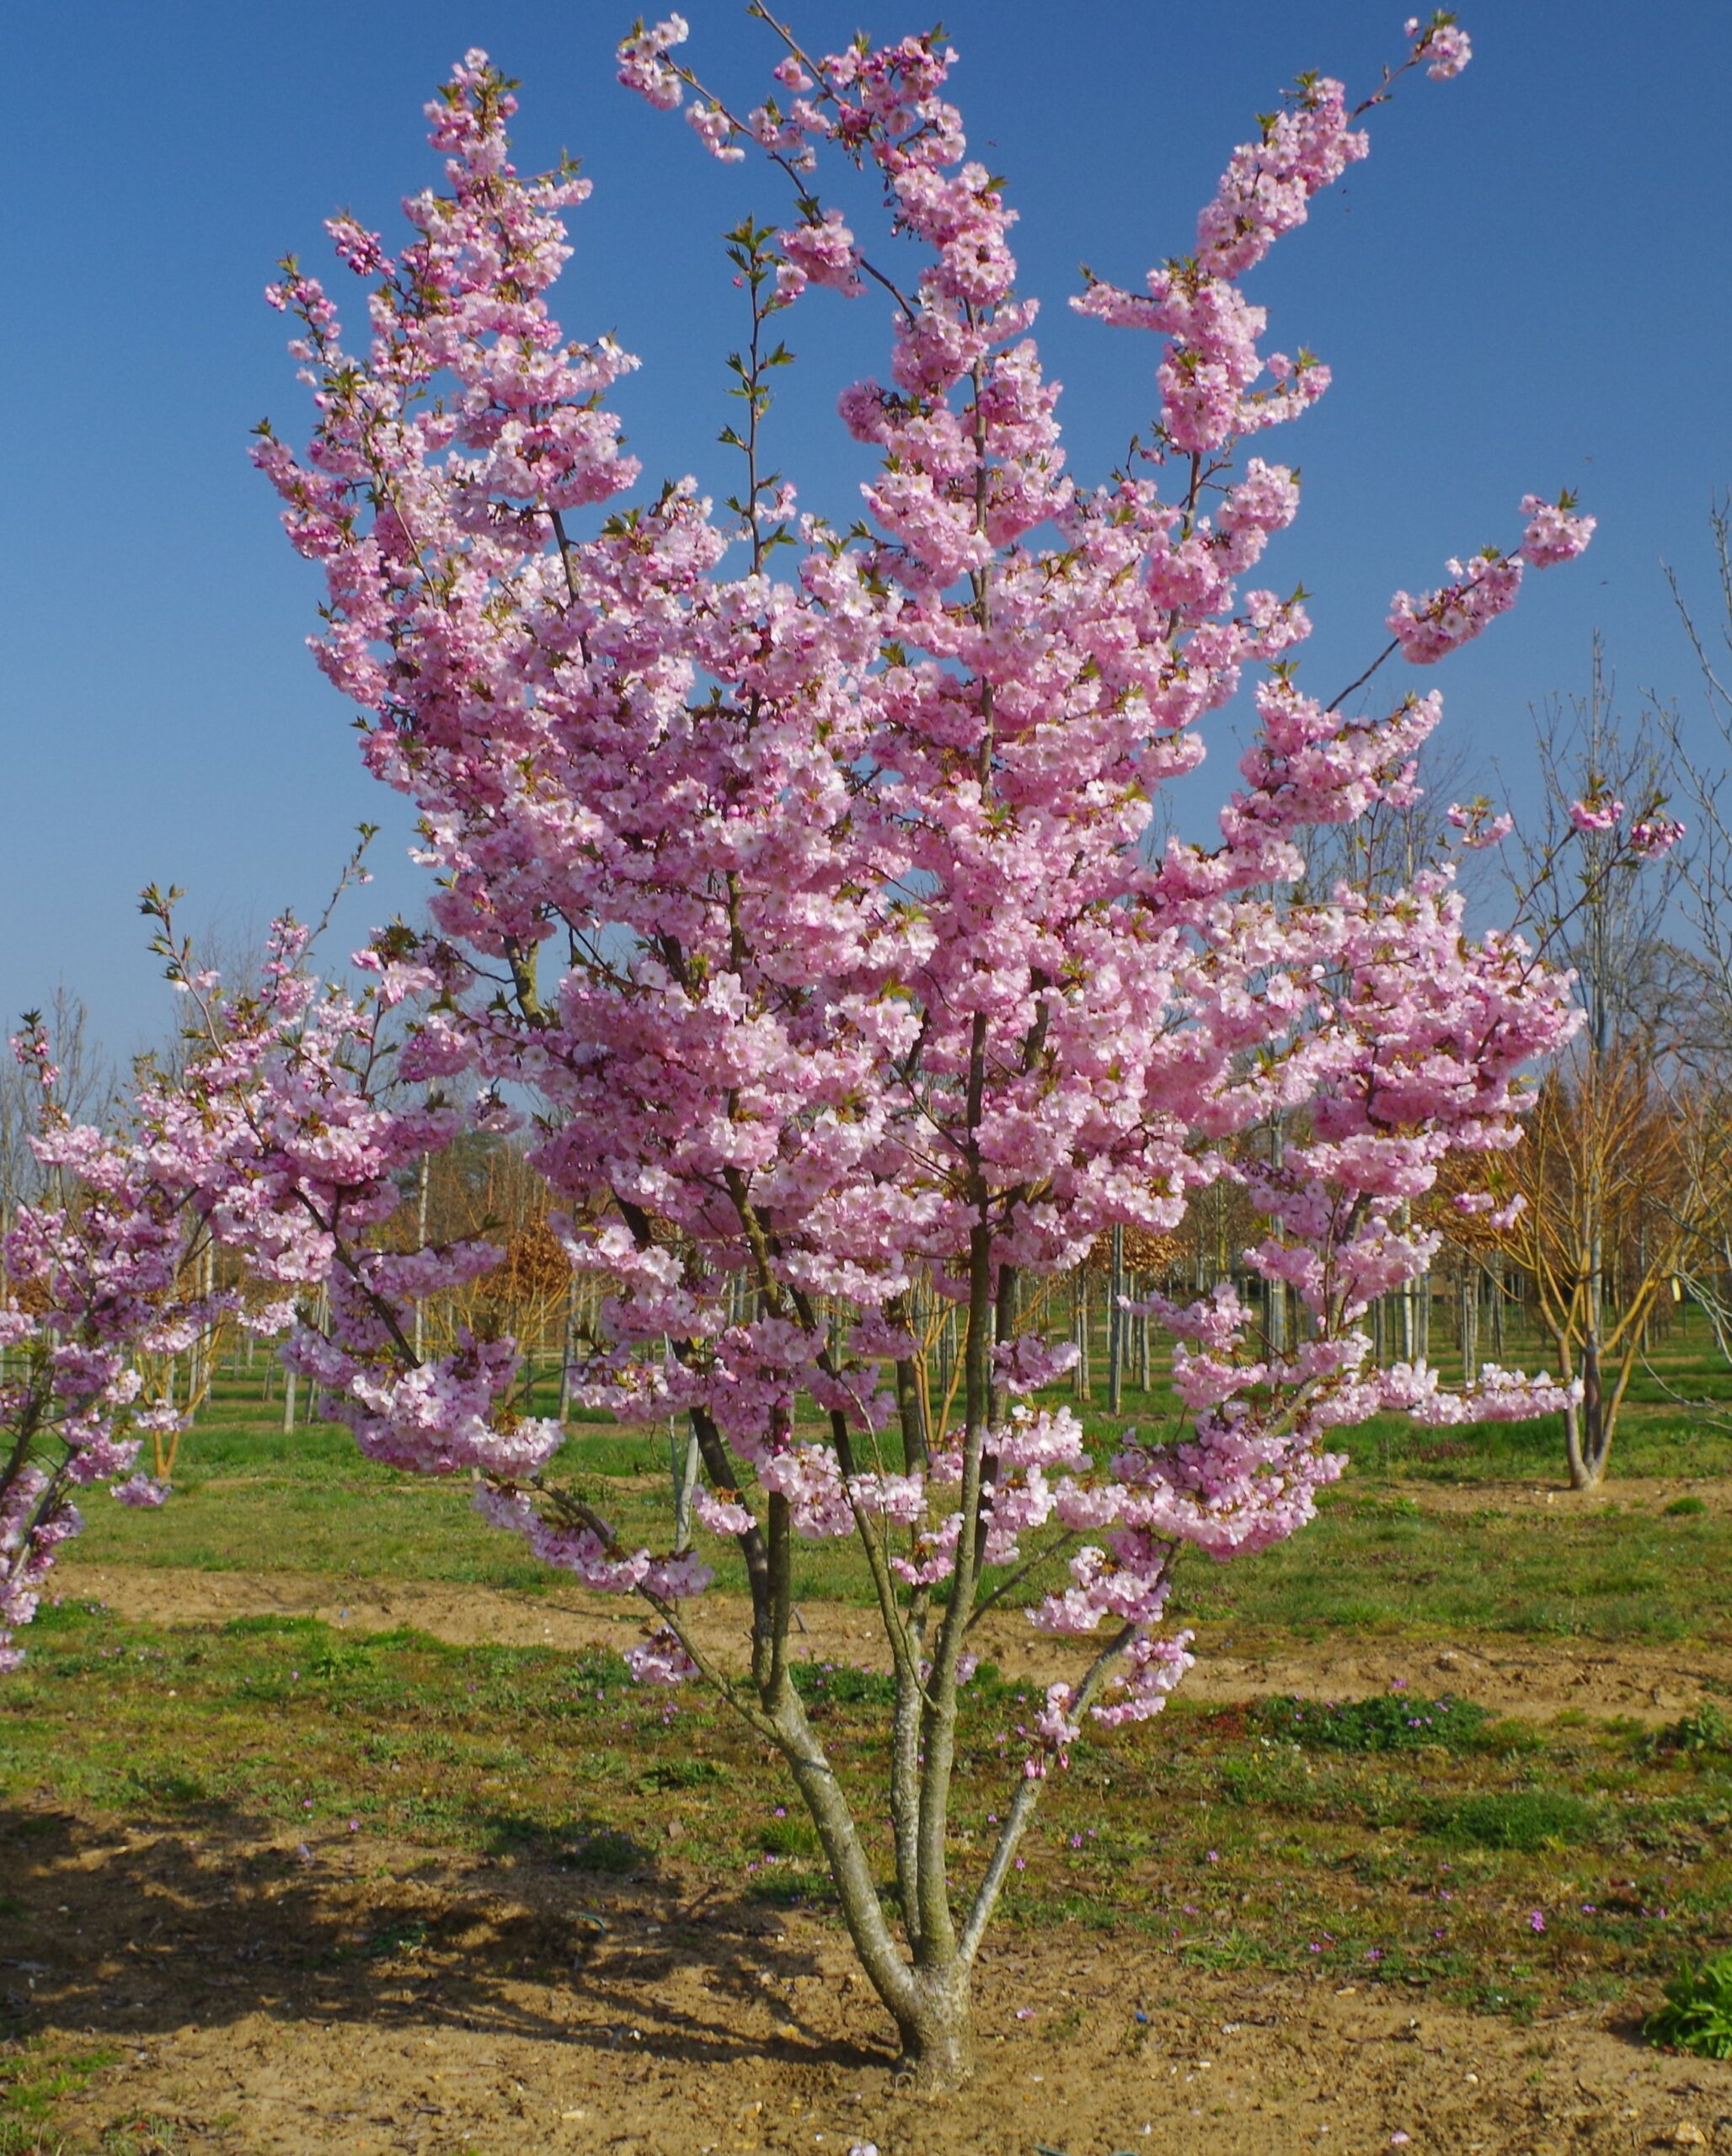 Prunus Accolade multi stem tree with pink flower blossom growing in field